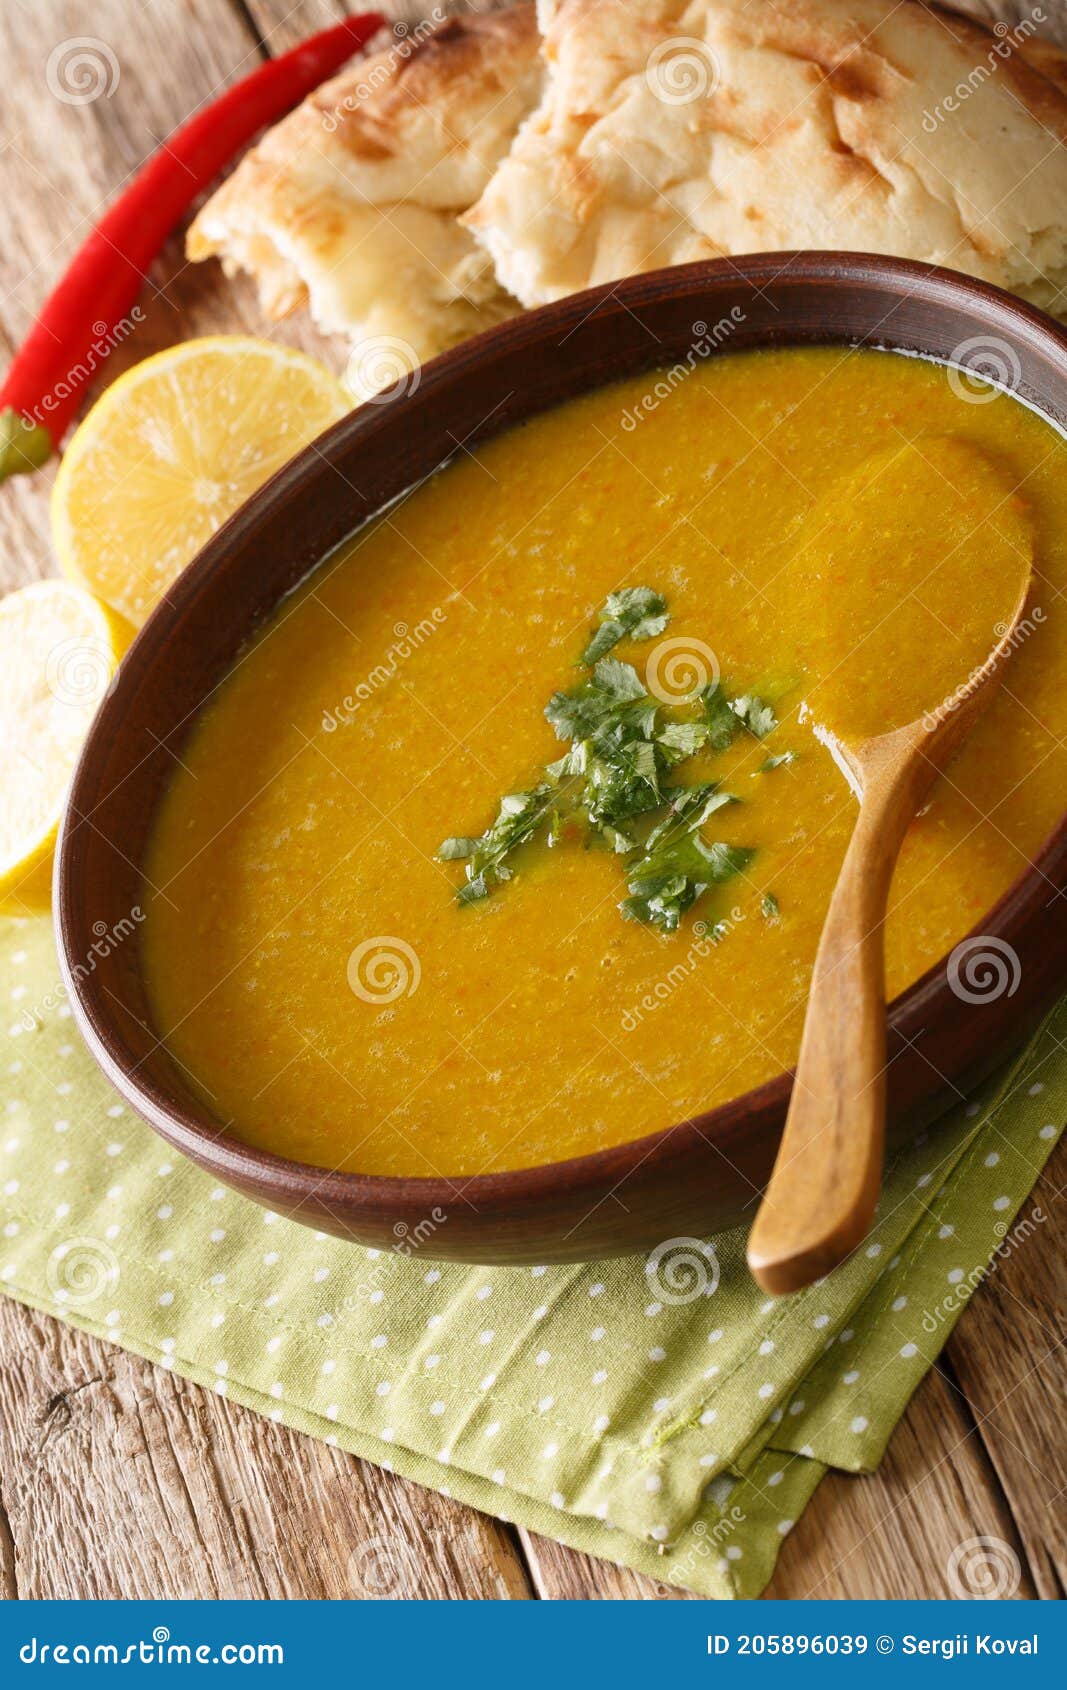 lebanese lentil soup shorbat adas closeup in the bowl. vertical